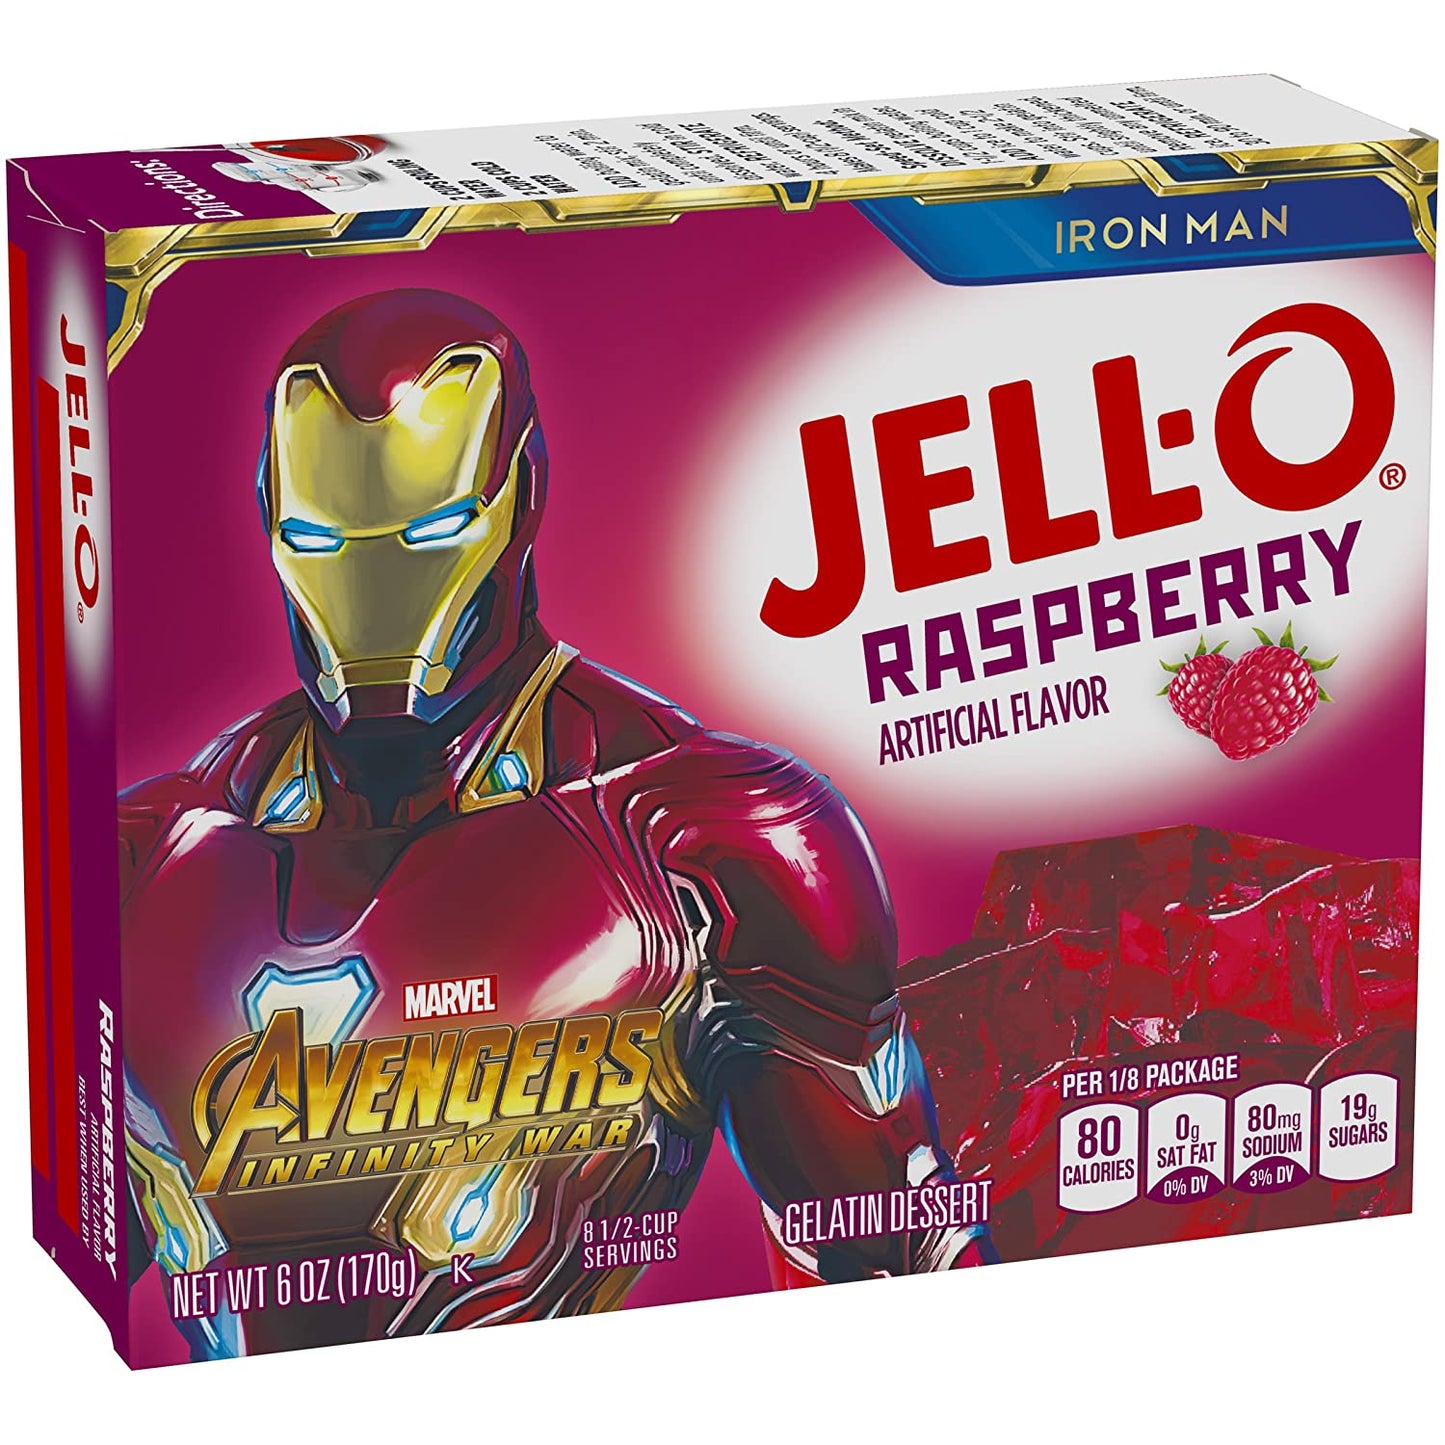 Jell-O Raspberry Gelatin Mix (6 Oz Box)